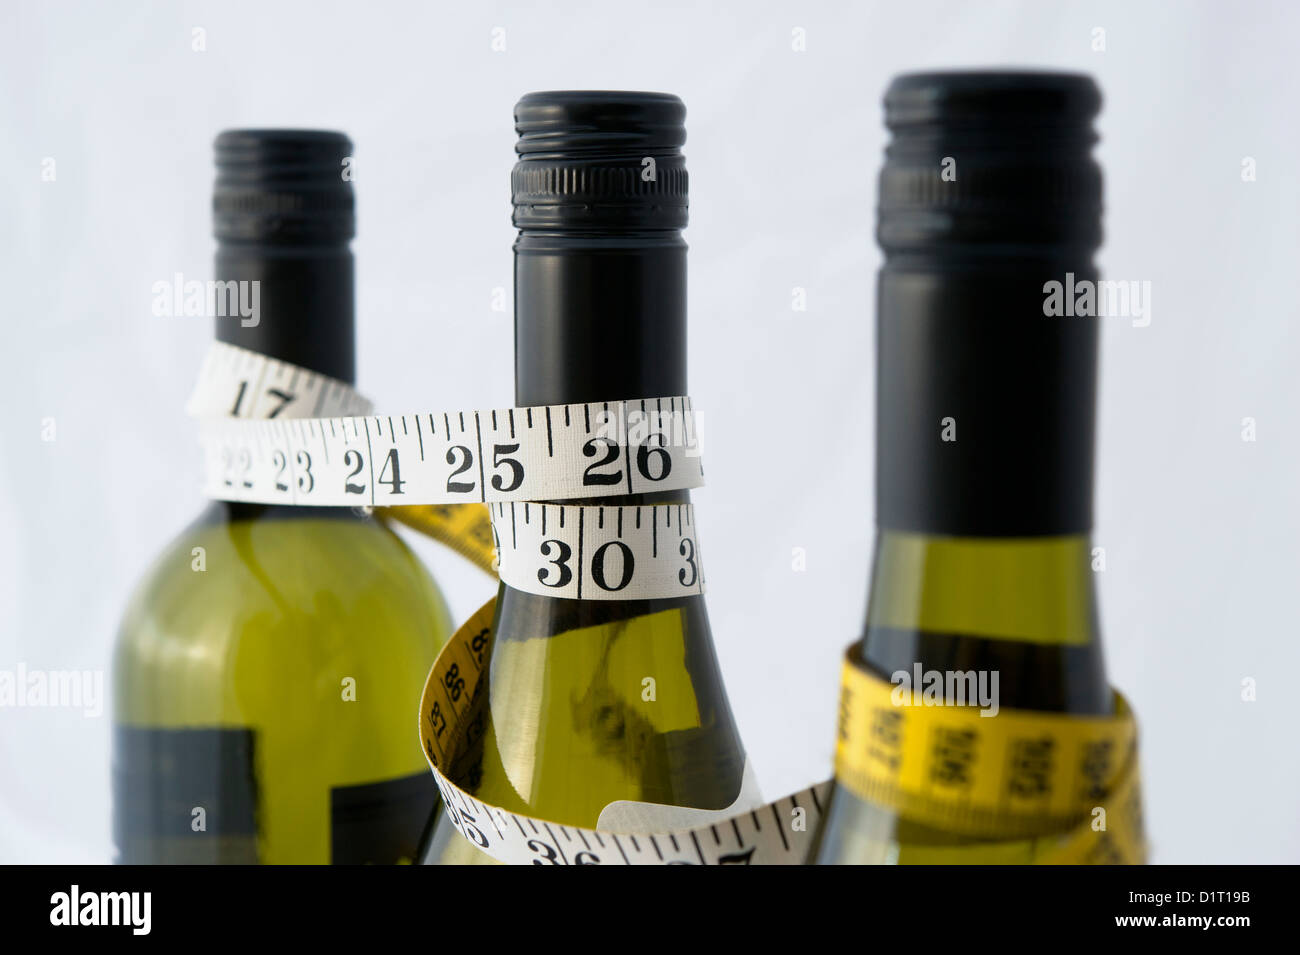 16,826 Alcohol Measurement Images, Stock Photos, 3D objects